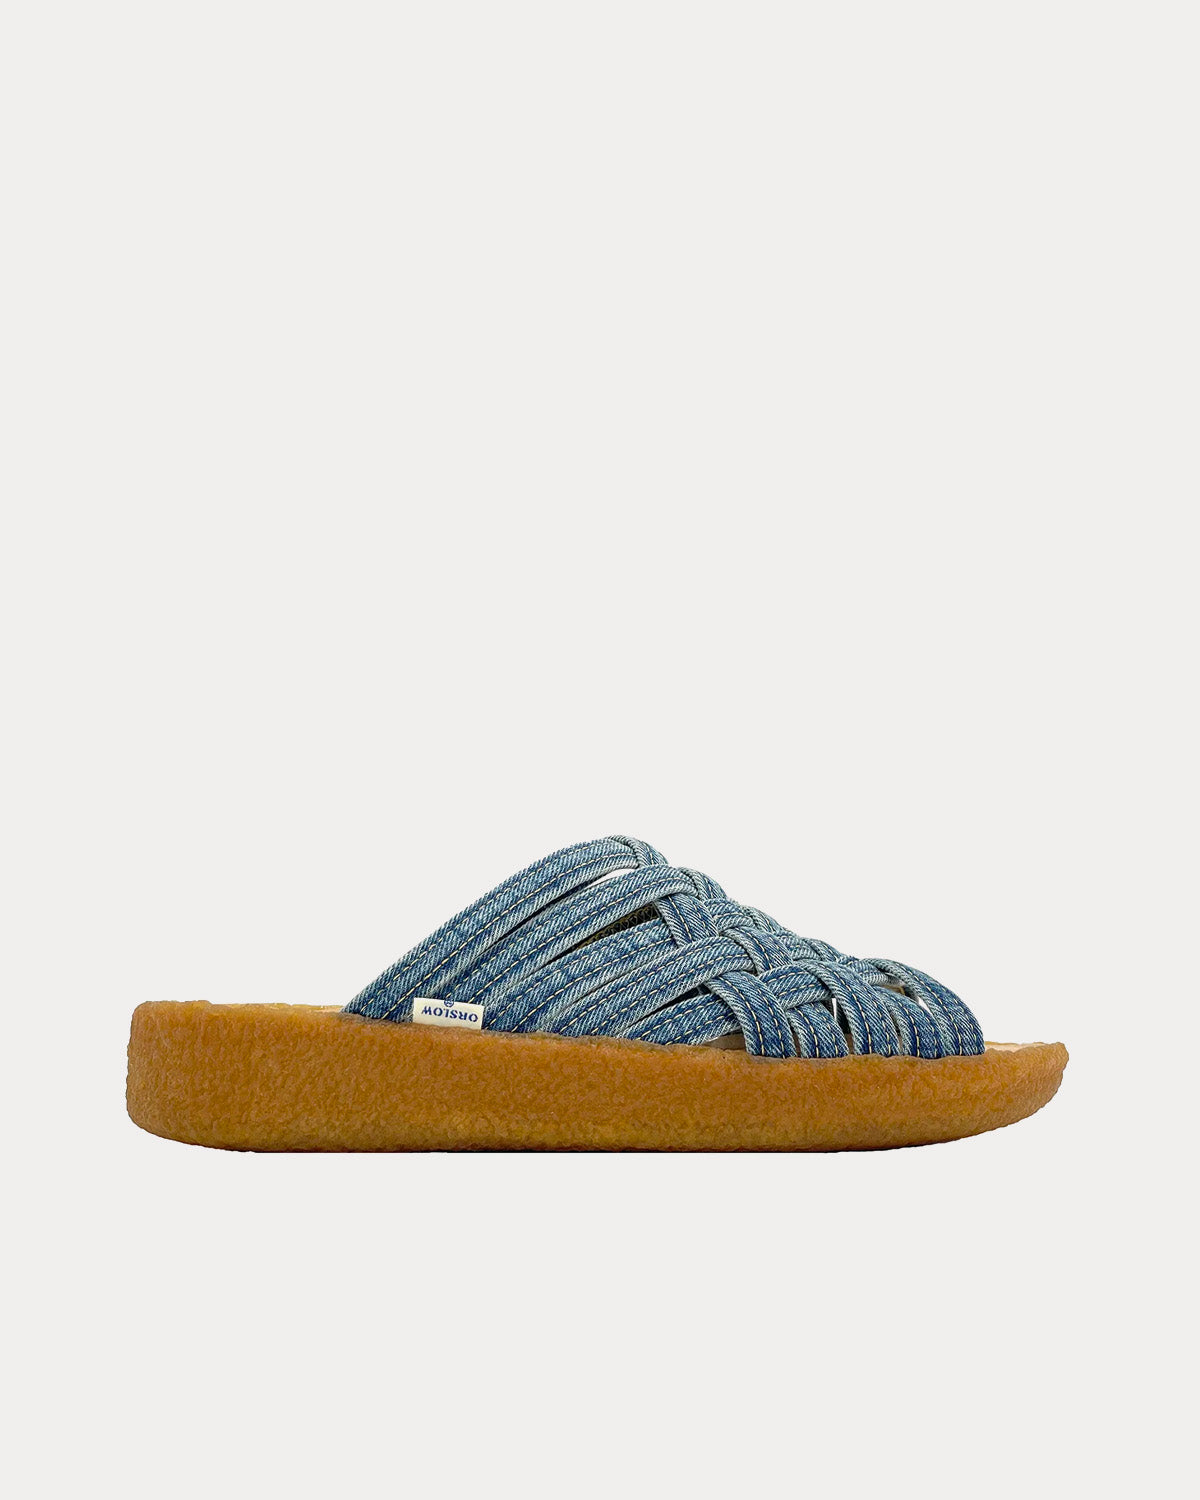 Malibu Sandals x orSlow - Zuma Washed Indigo Denim Sandals